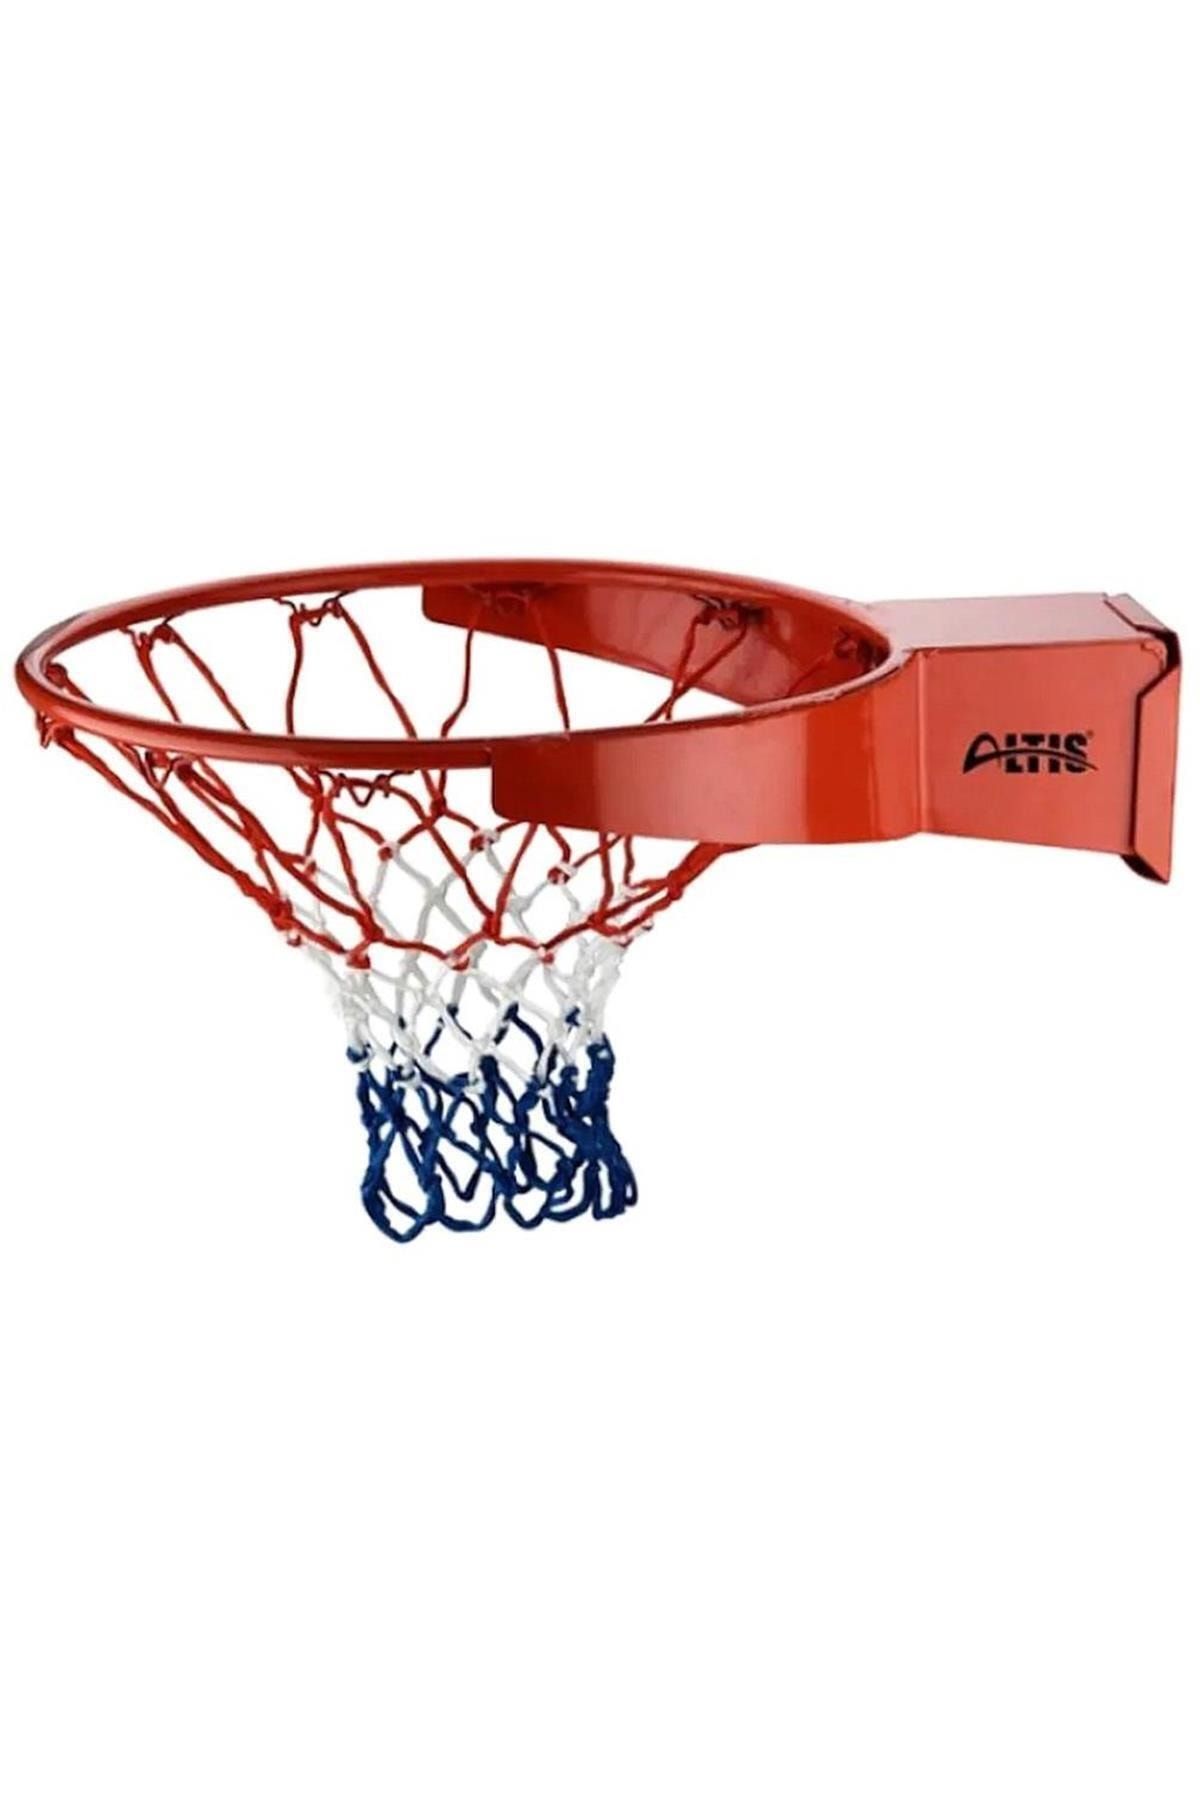 ALTIS Basketbol Pota Çemberi Br-10